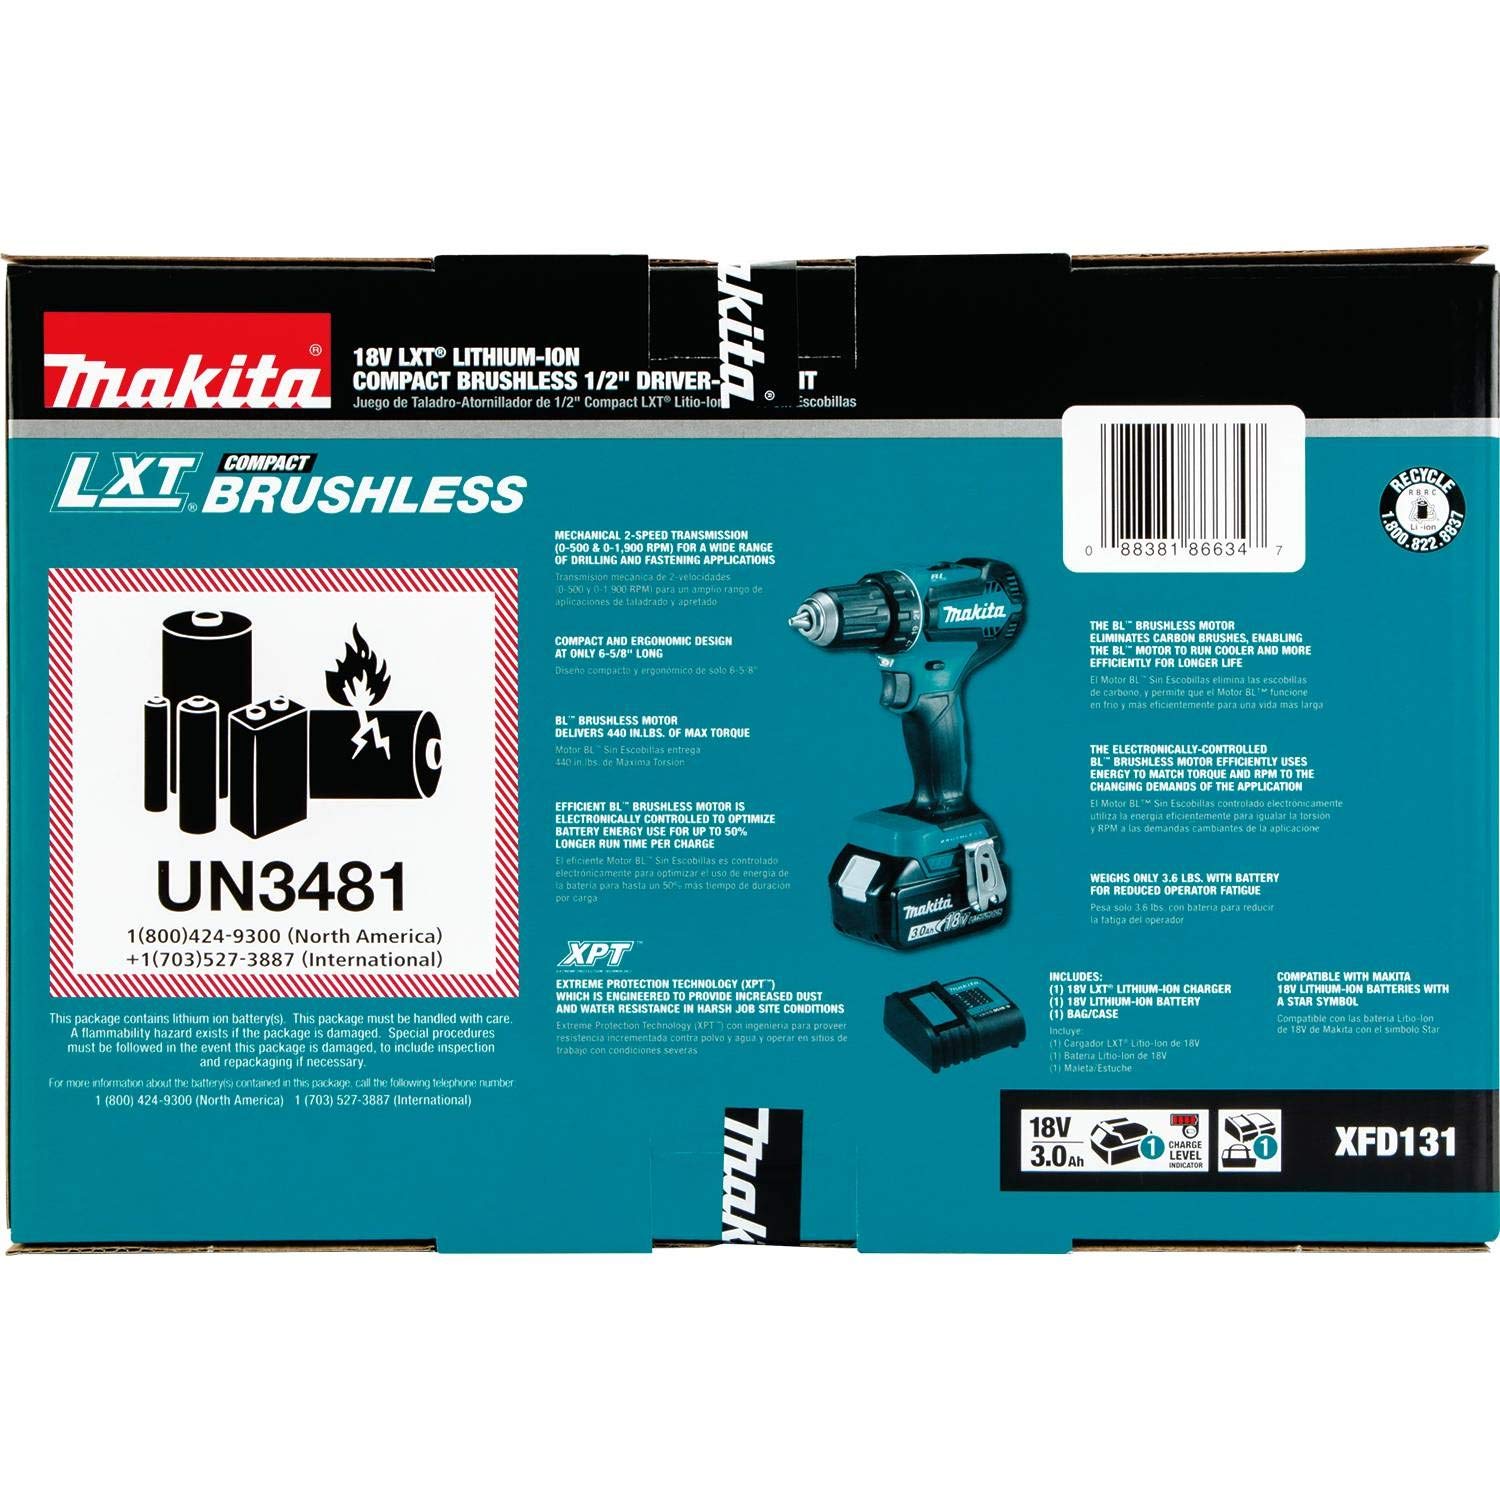 Makita XFD131 18V LXT® Lithium-Ion Brushless Cordless 1/2